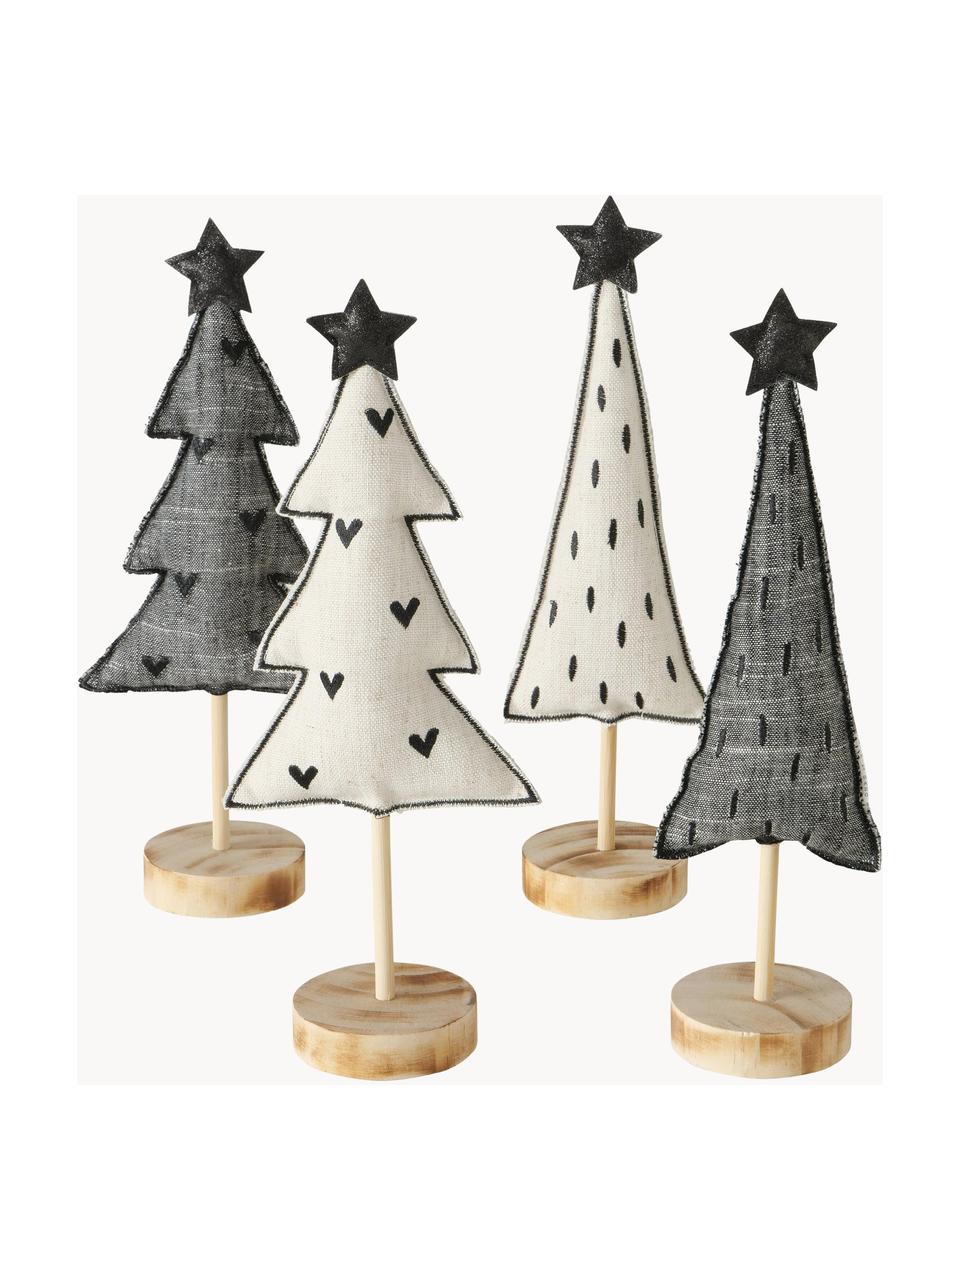 Decoratieve kerstboomset Skagen, 4-delig, Grijs, zwart, wit, lichtbruin, B 13 x H 32 cm